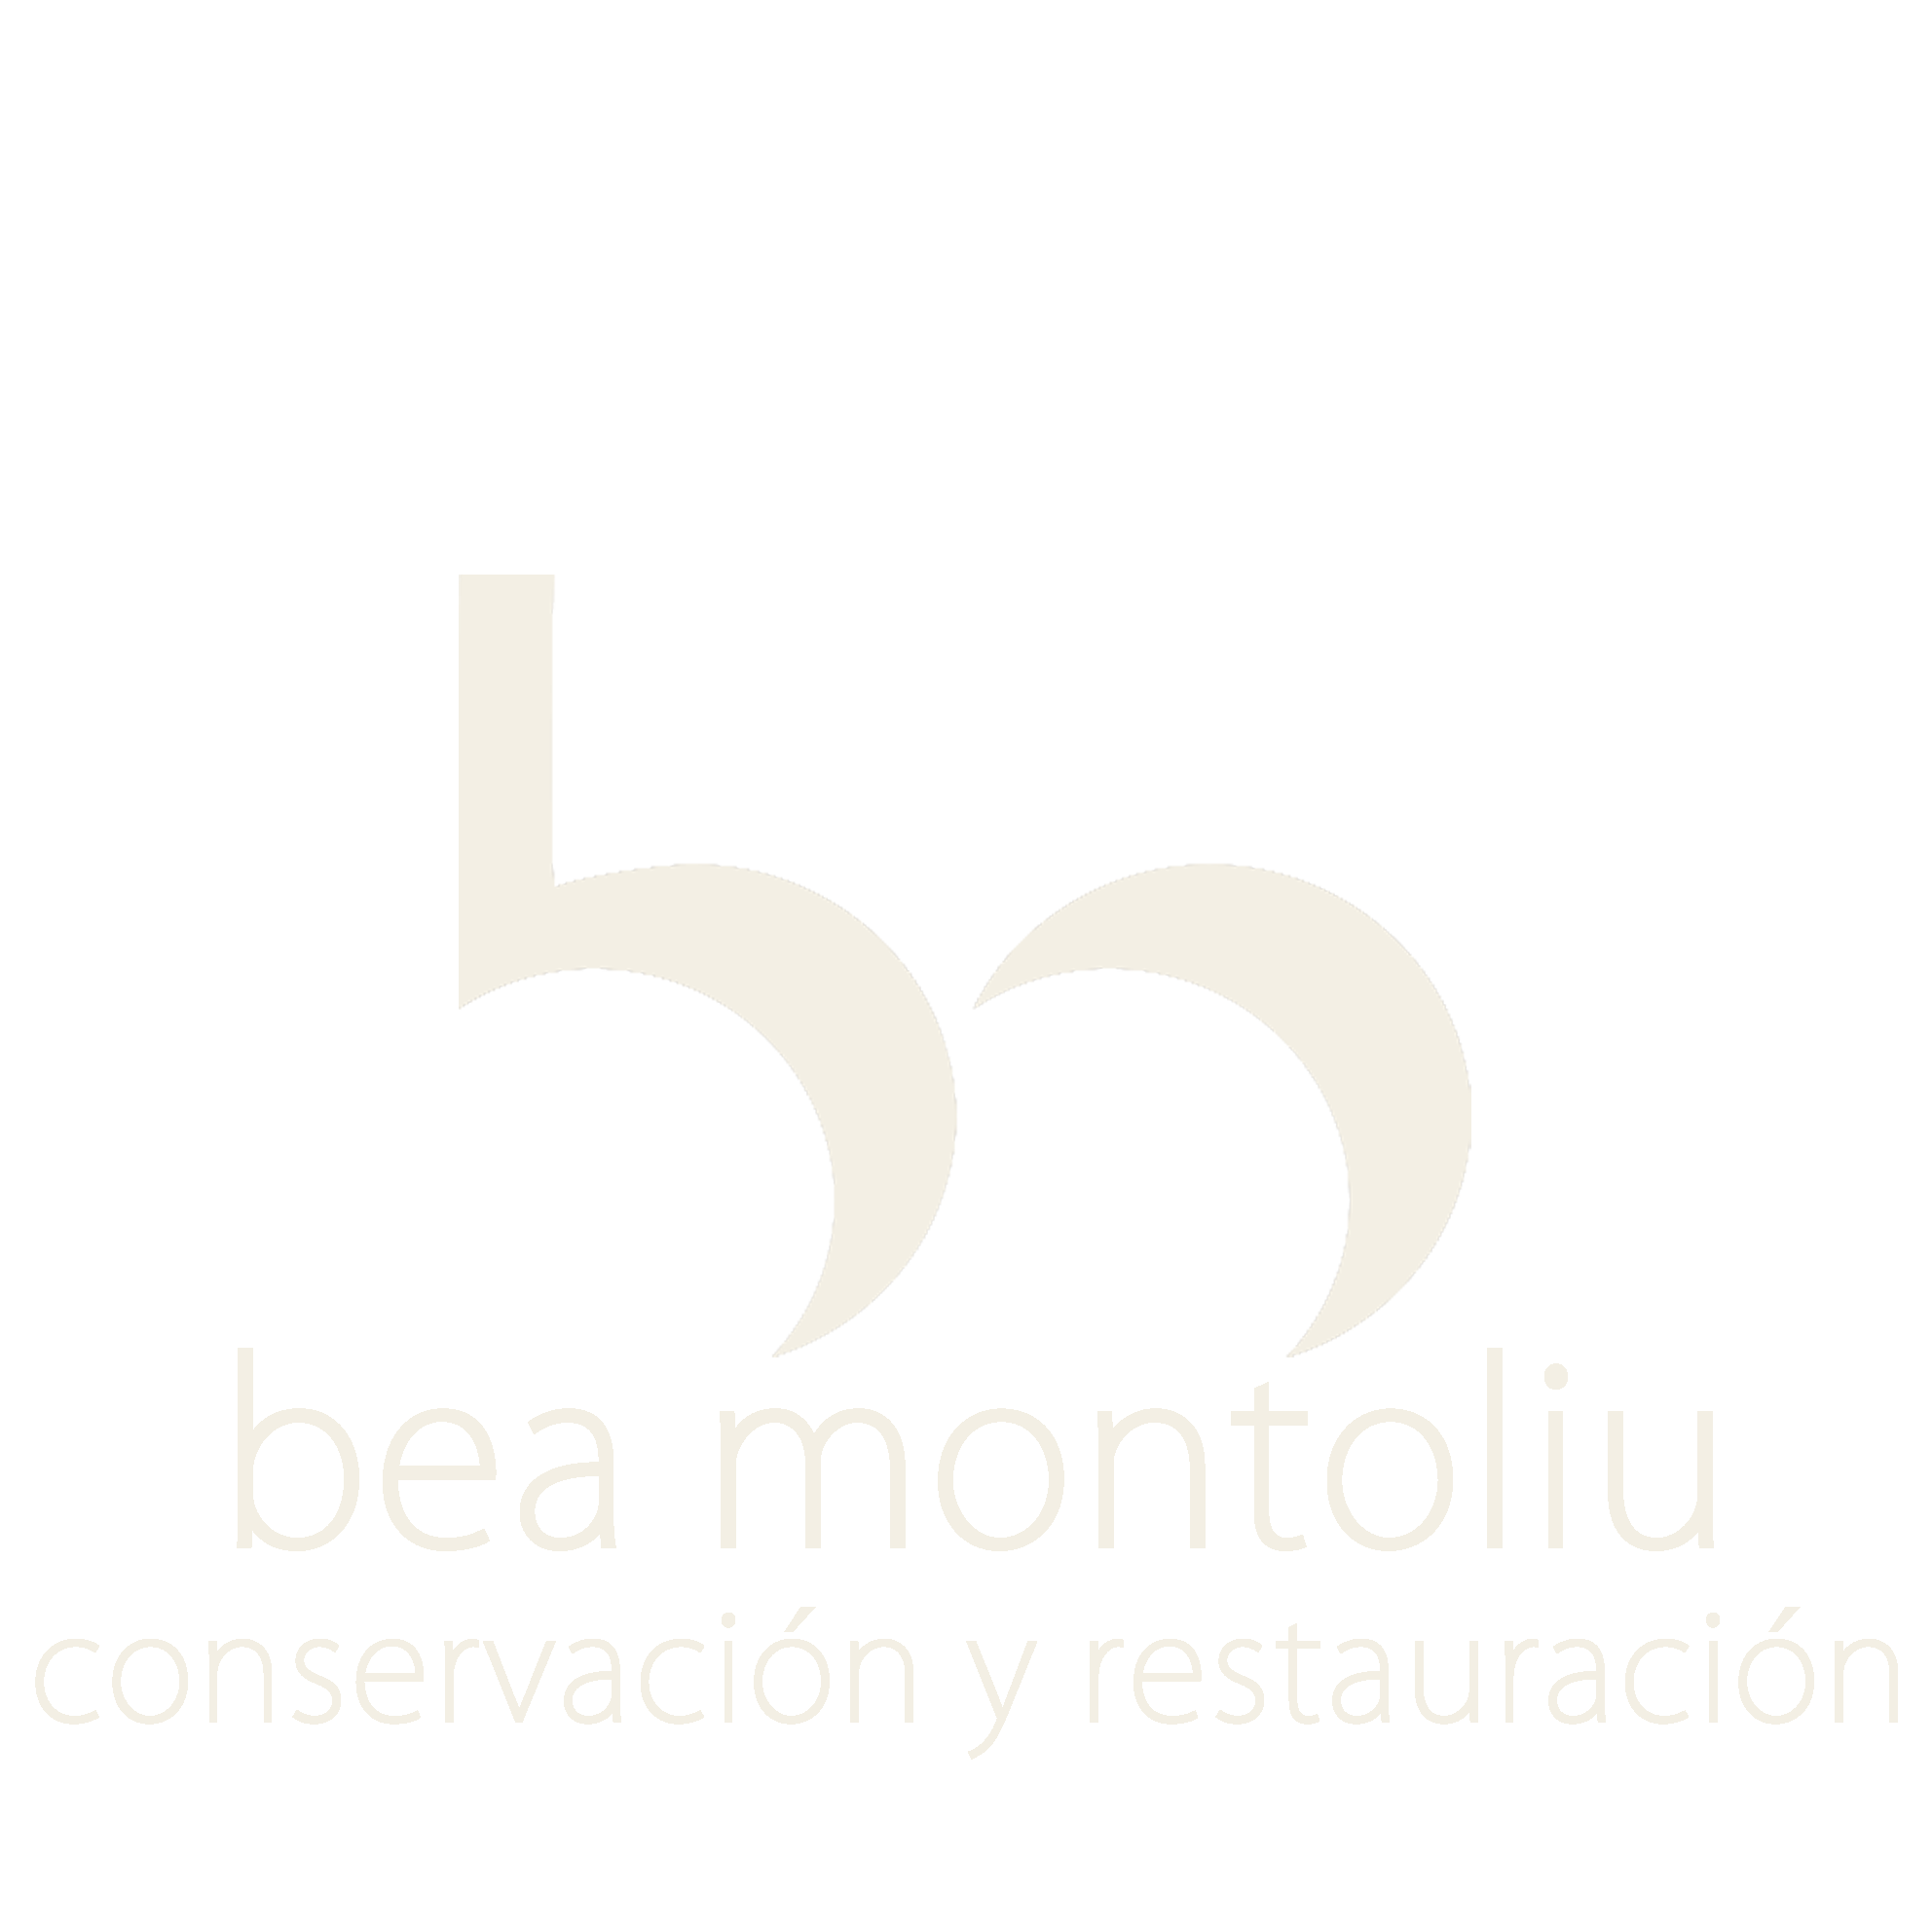 bea montoliu - Conservación y Restauración